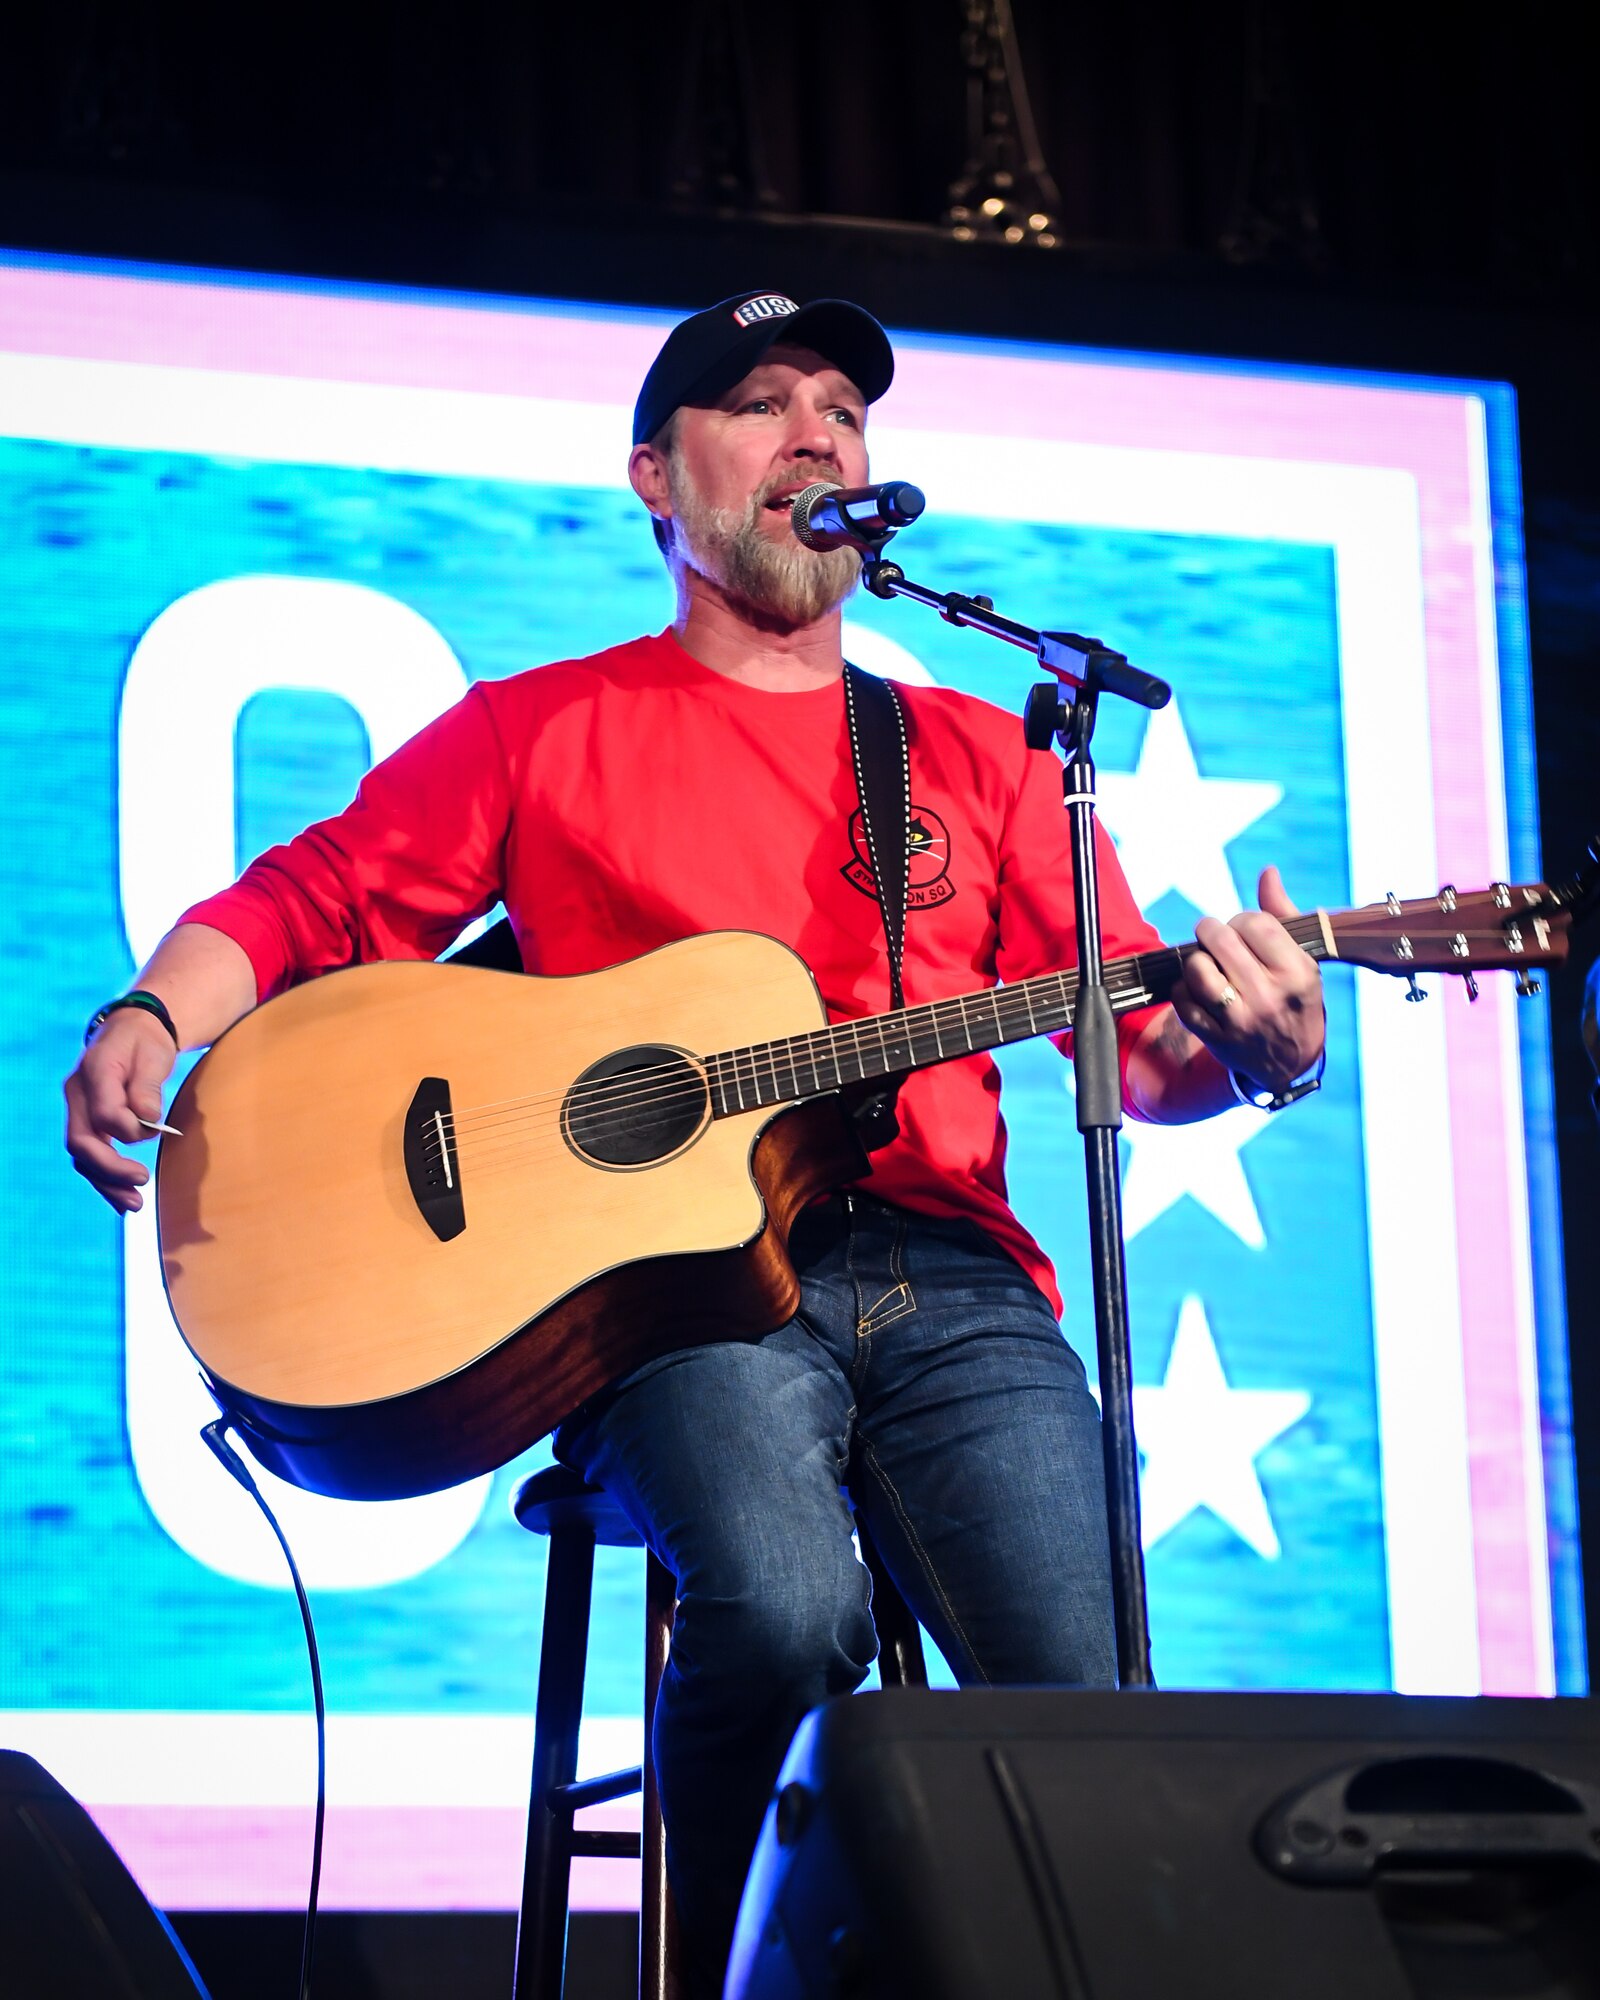 Award-winning country music singer and U.S. Army veteran Craig Morgan performs before a crowd during a USO tour at Osan Air Base, Republic of Korea, April 23, 2018.